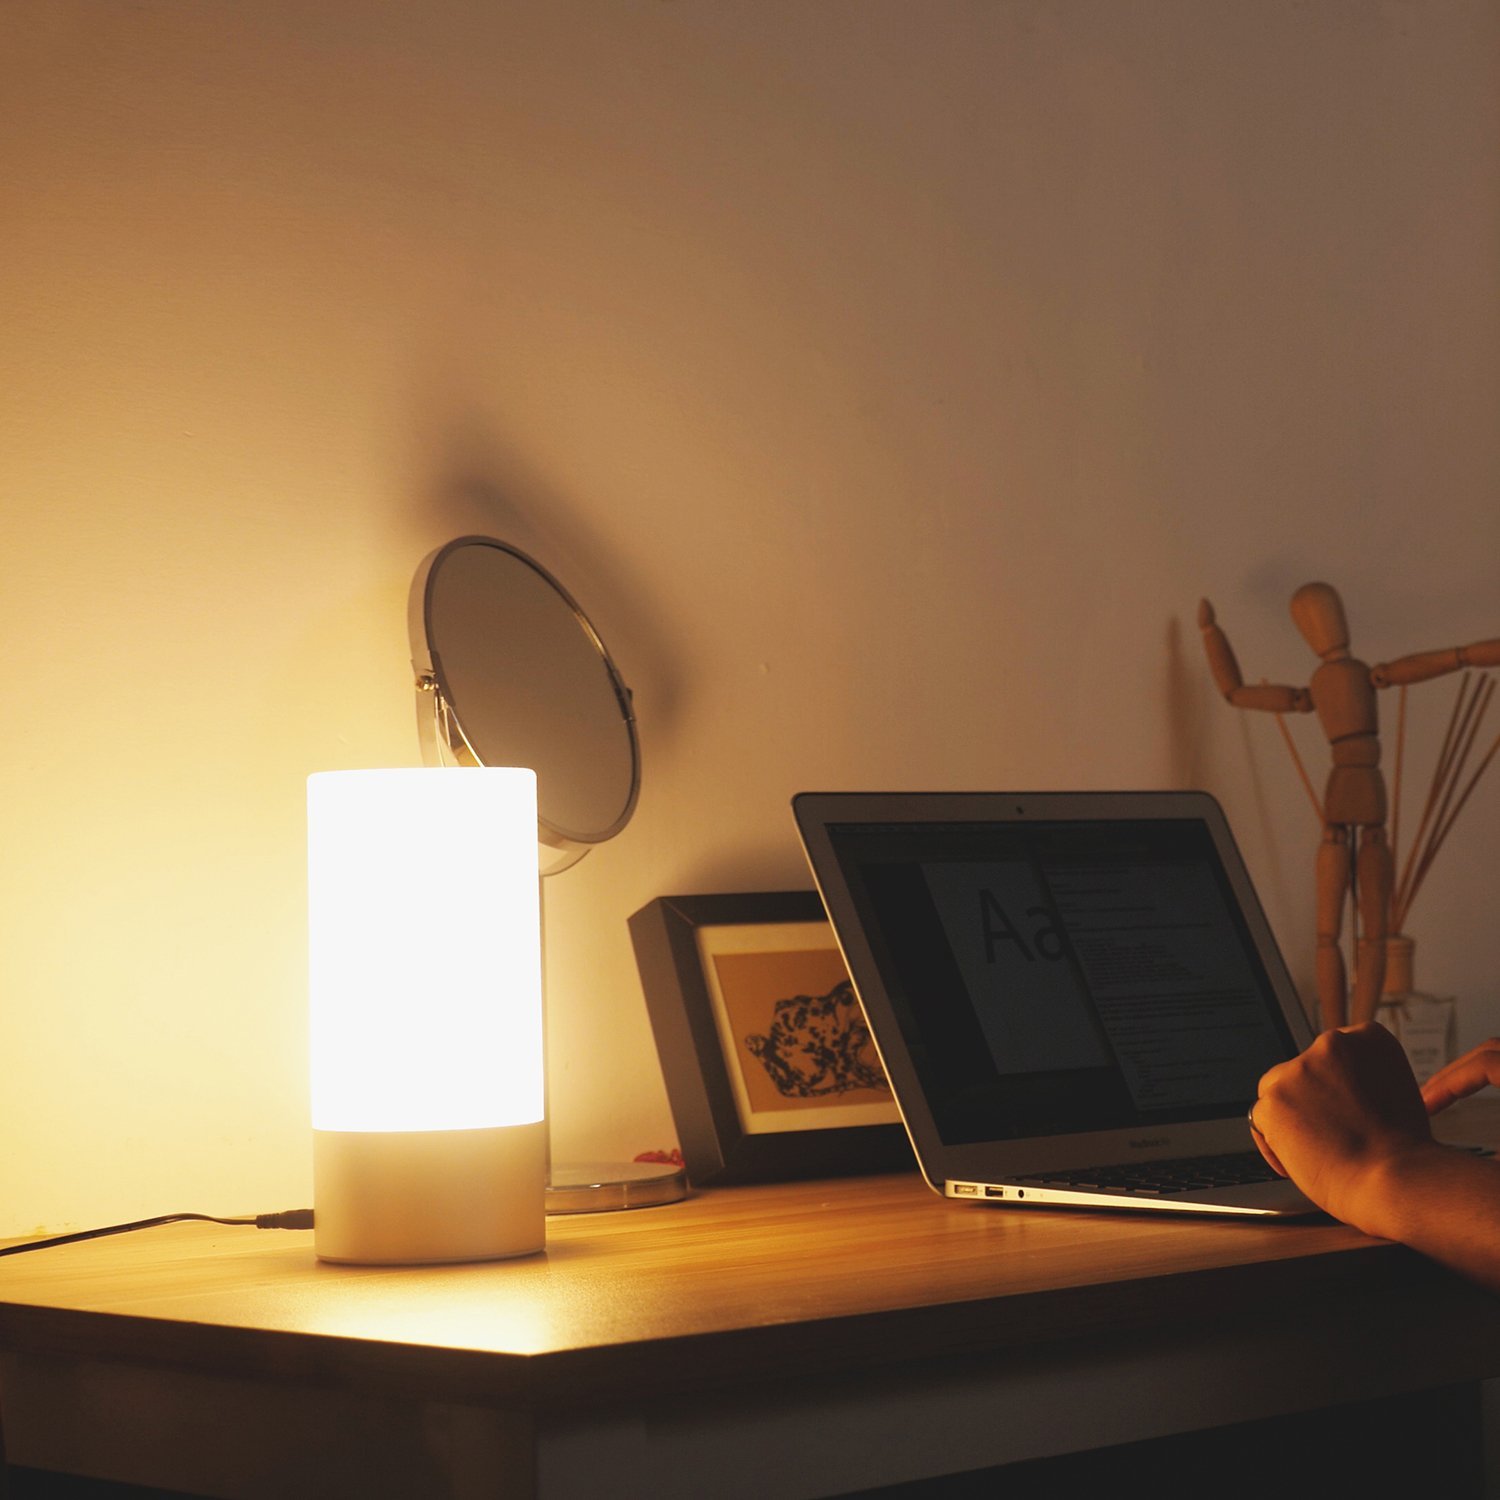 Lampada LED per casa, luce multicolore: scontata a 19,99 euro